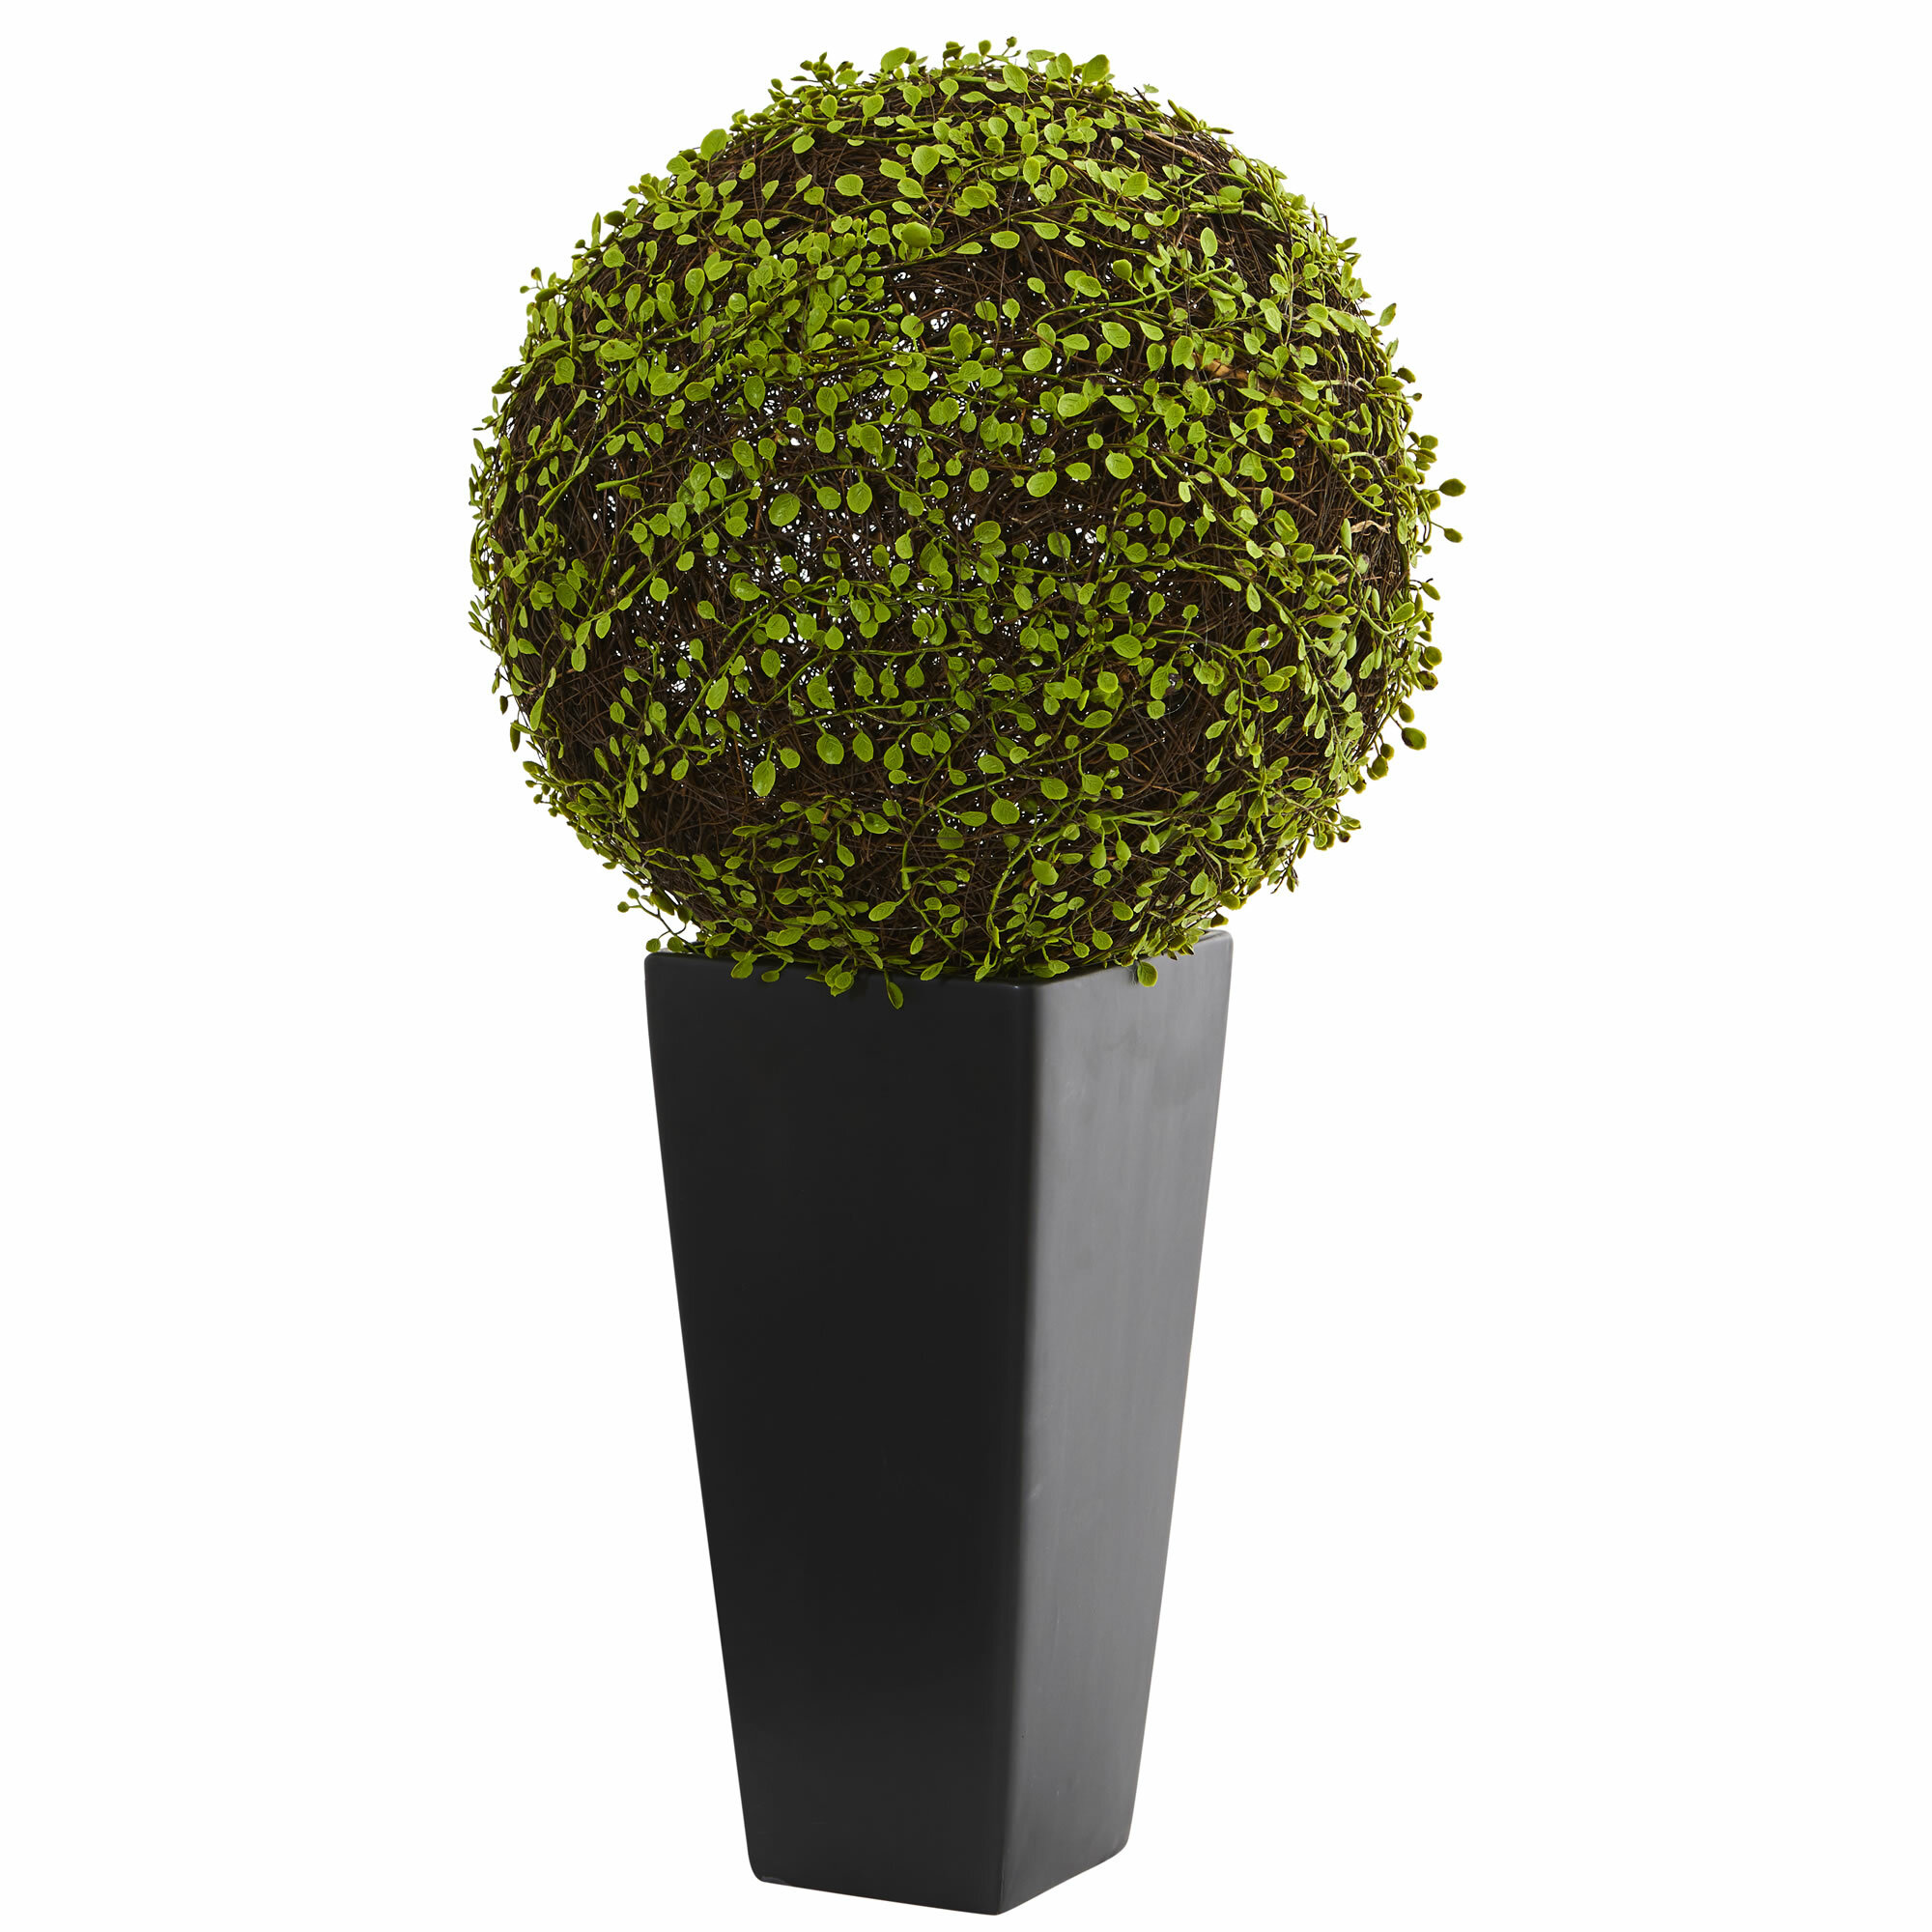 Moss Sphere Decorative Greenery Ball